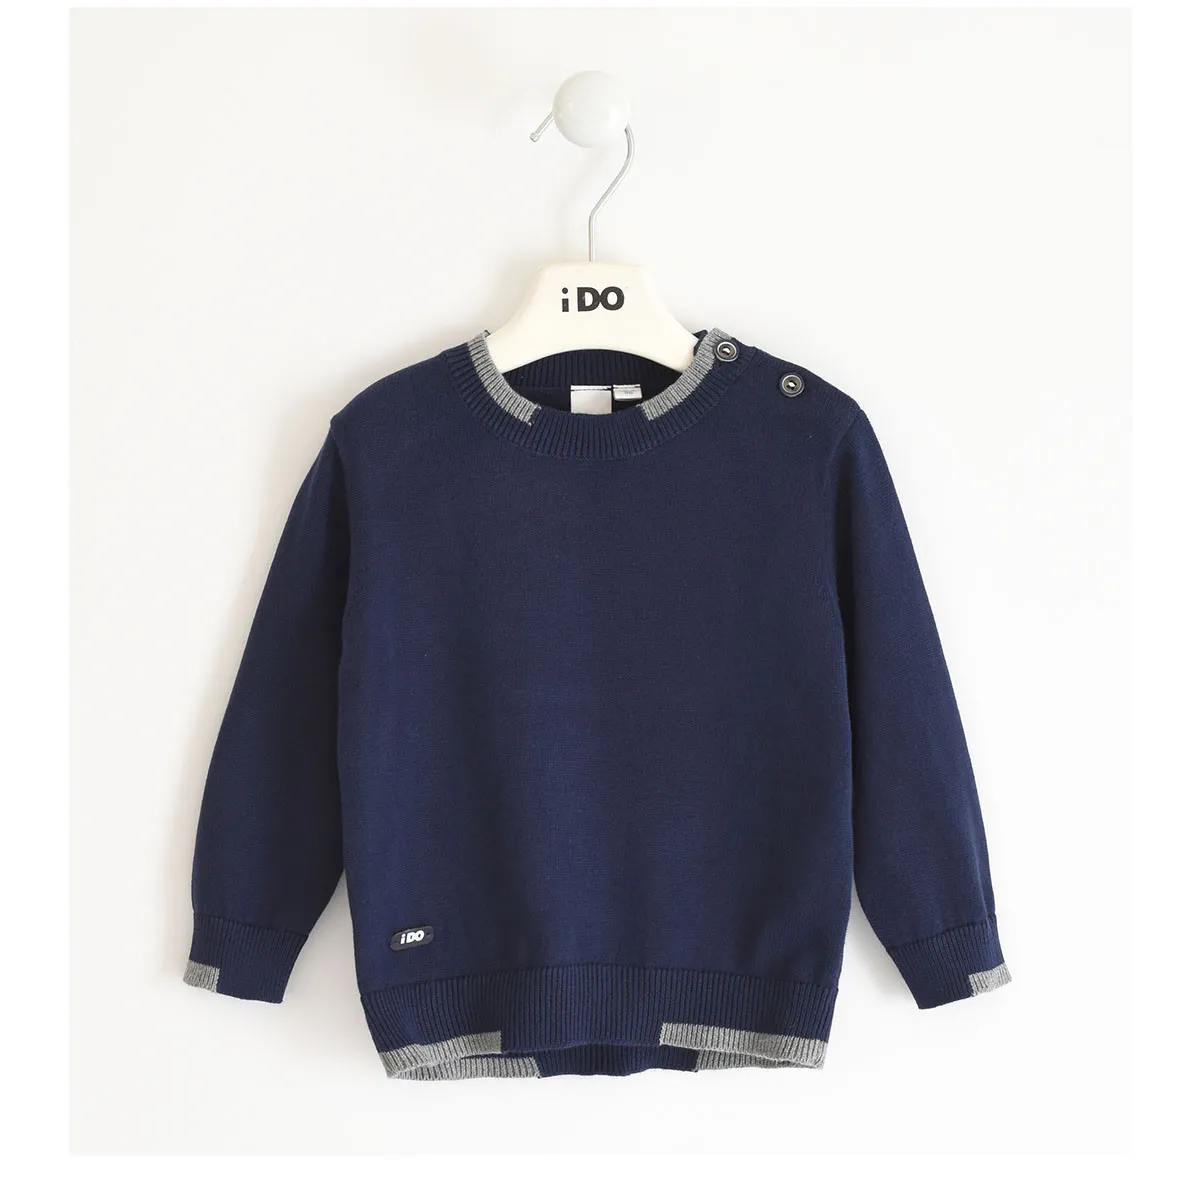 IDO džemper, 86-116